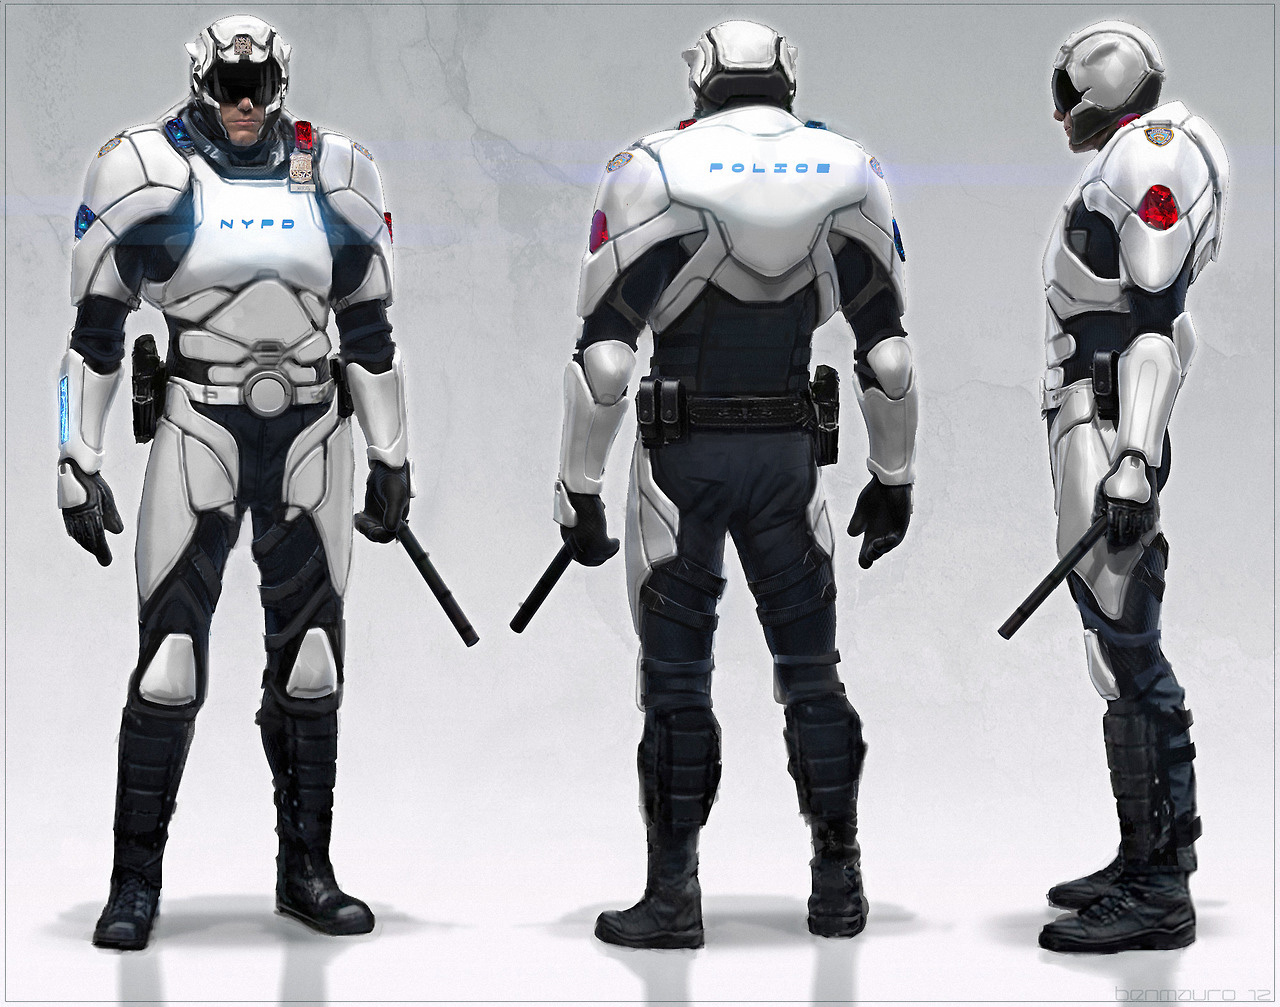 Cool Future Armor